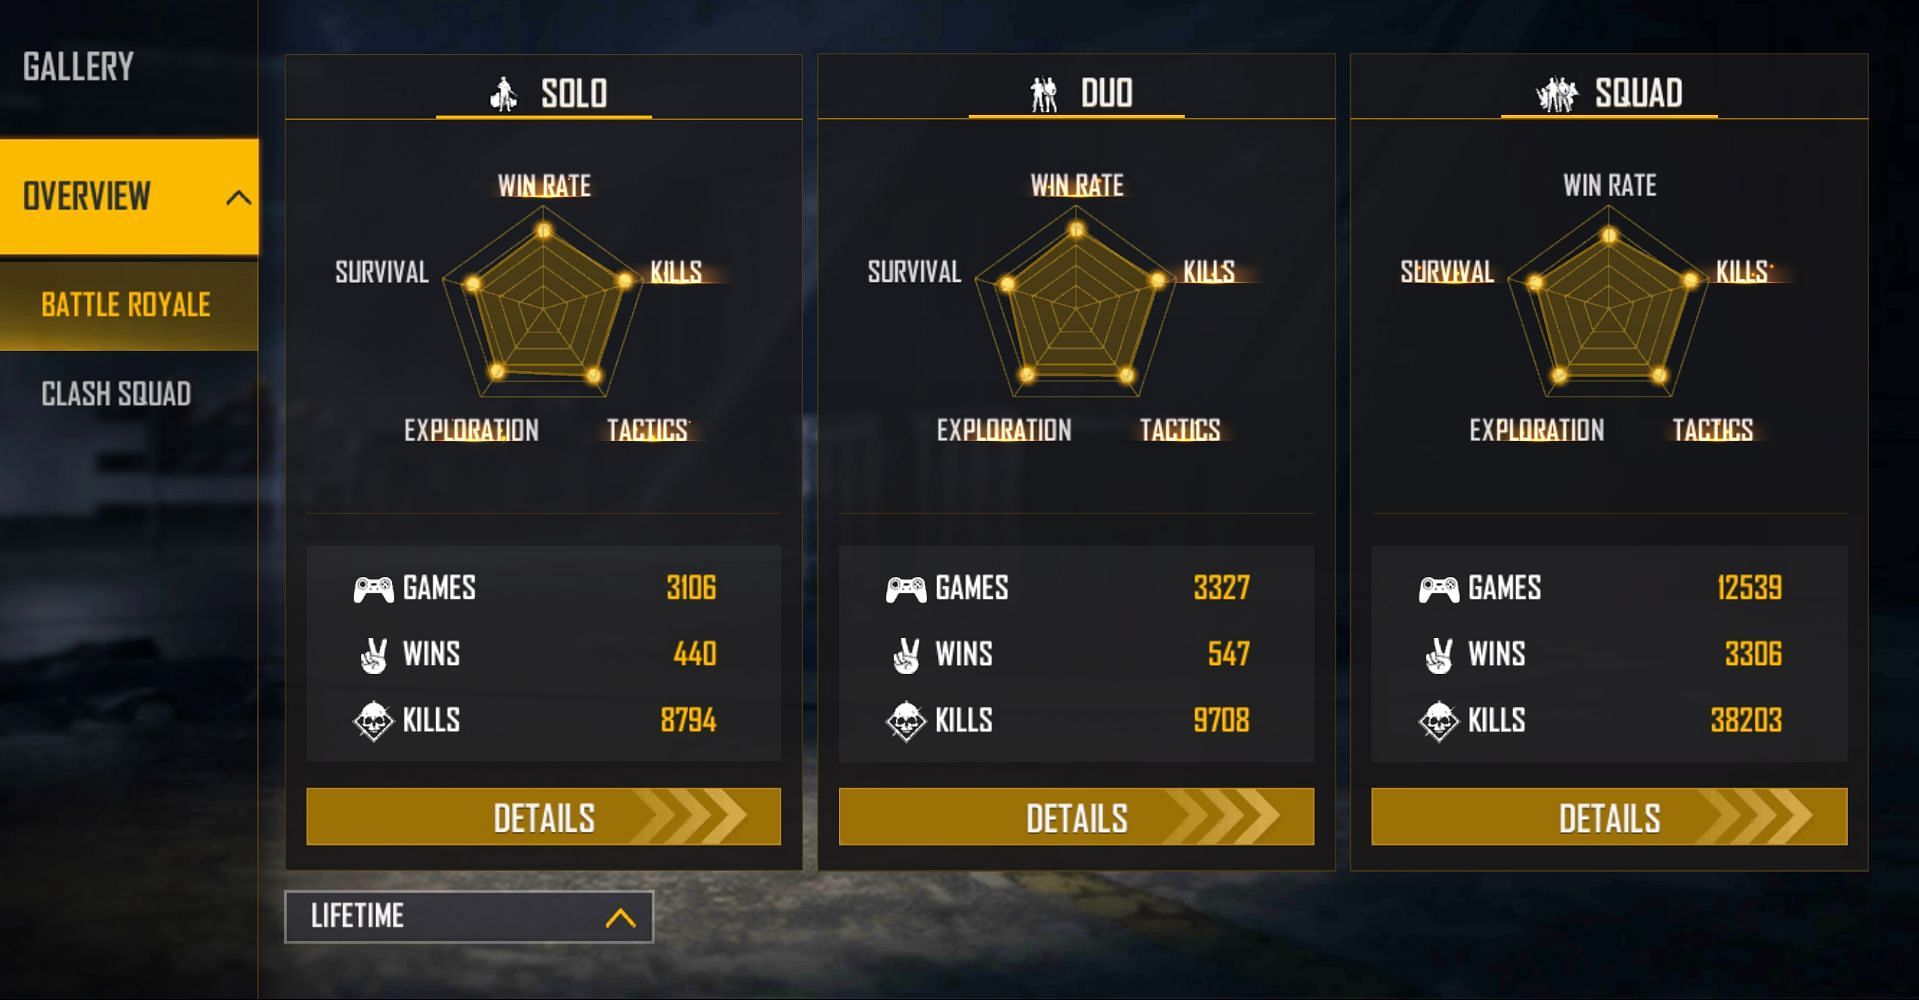 X-Mania has 38k kills in squad matches (Image via Free Fire)